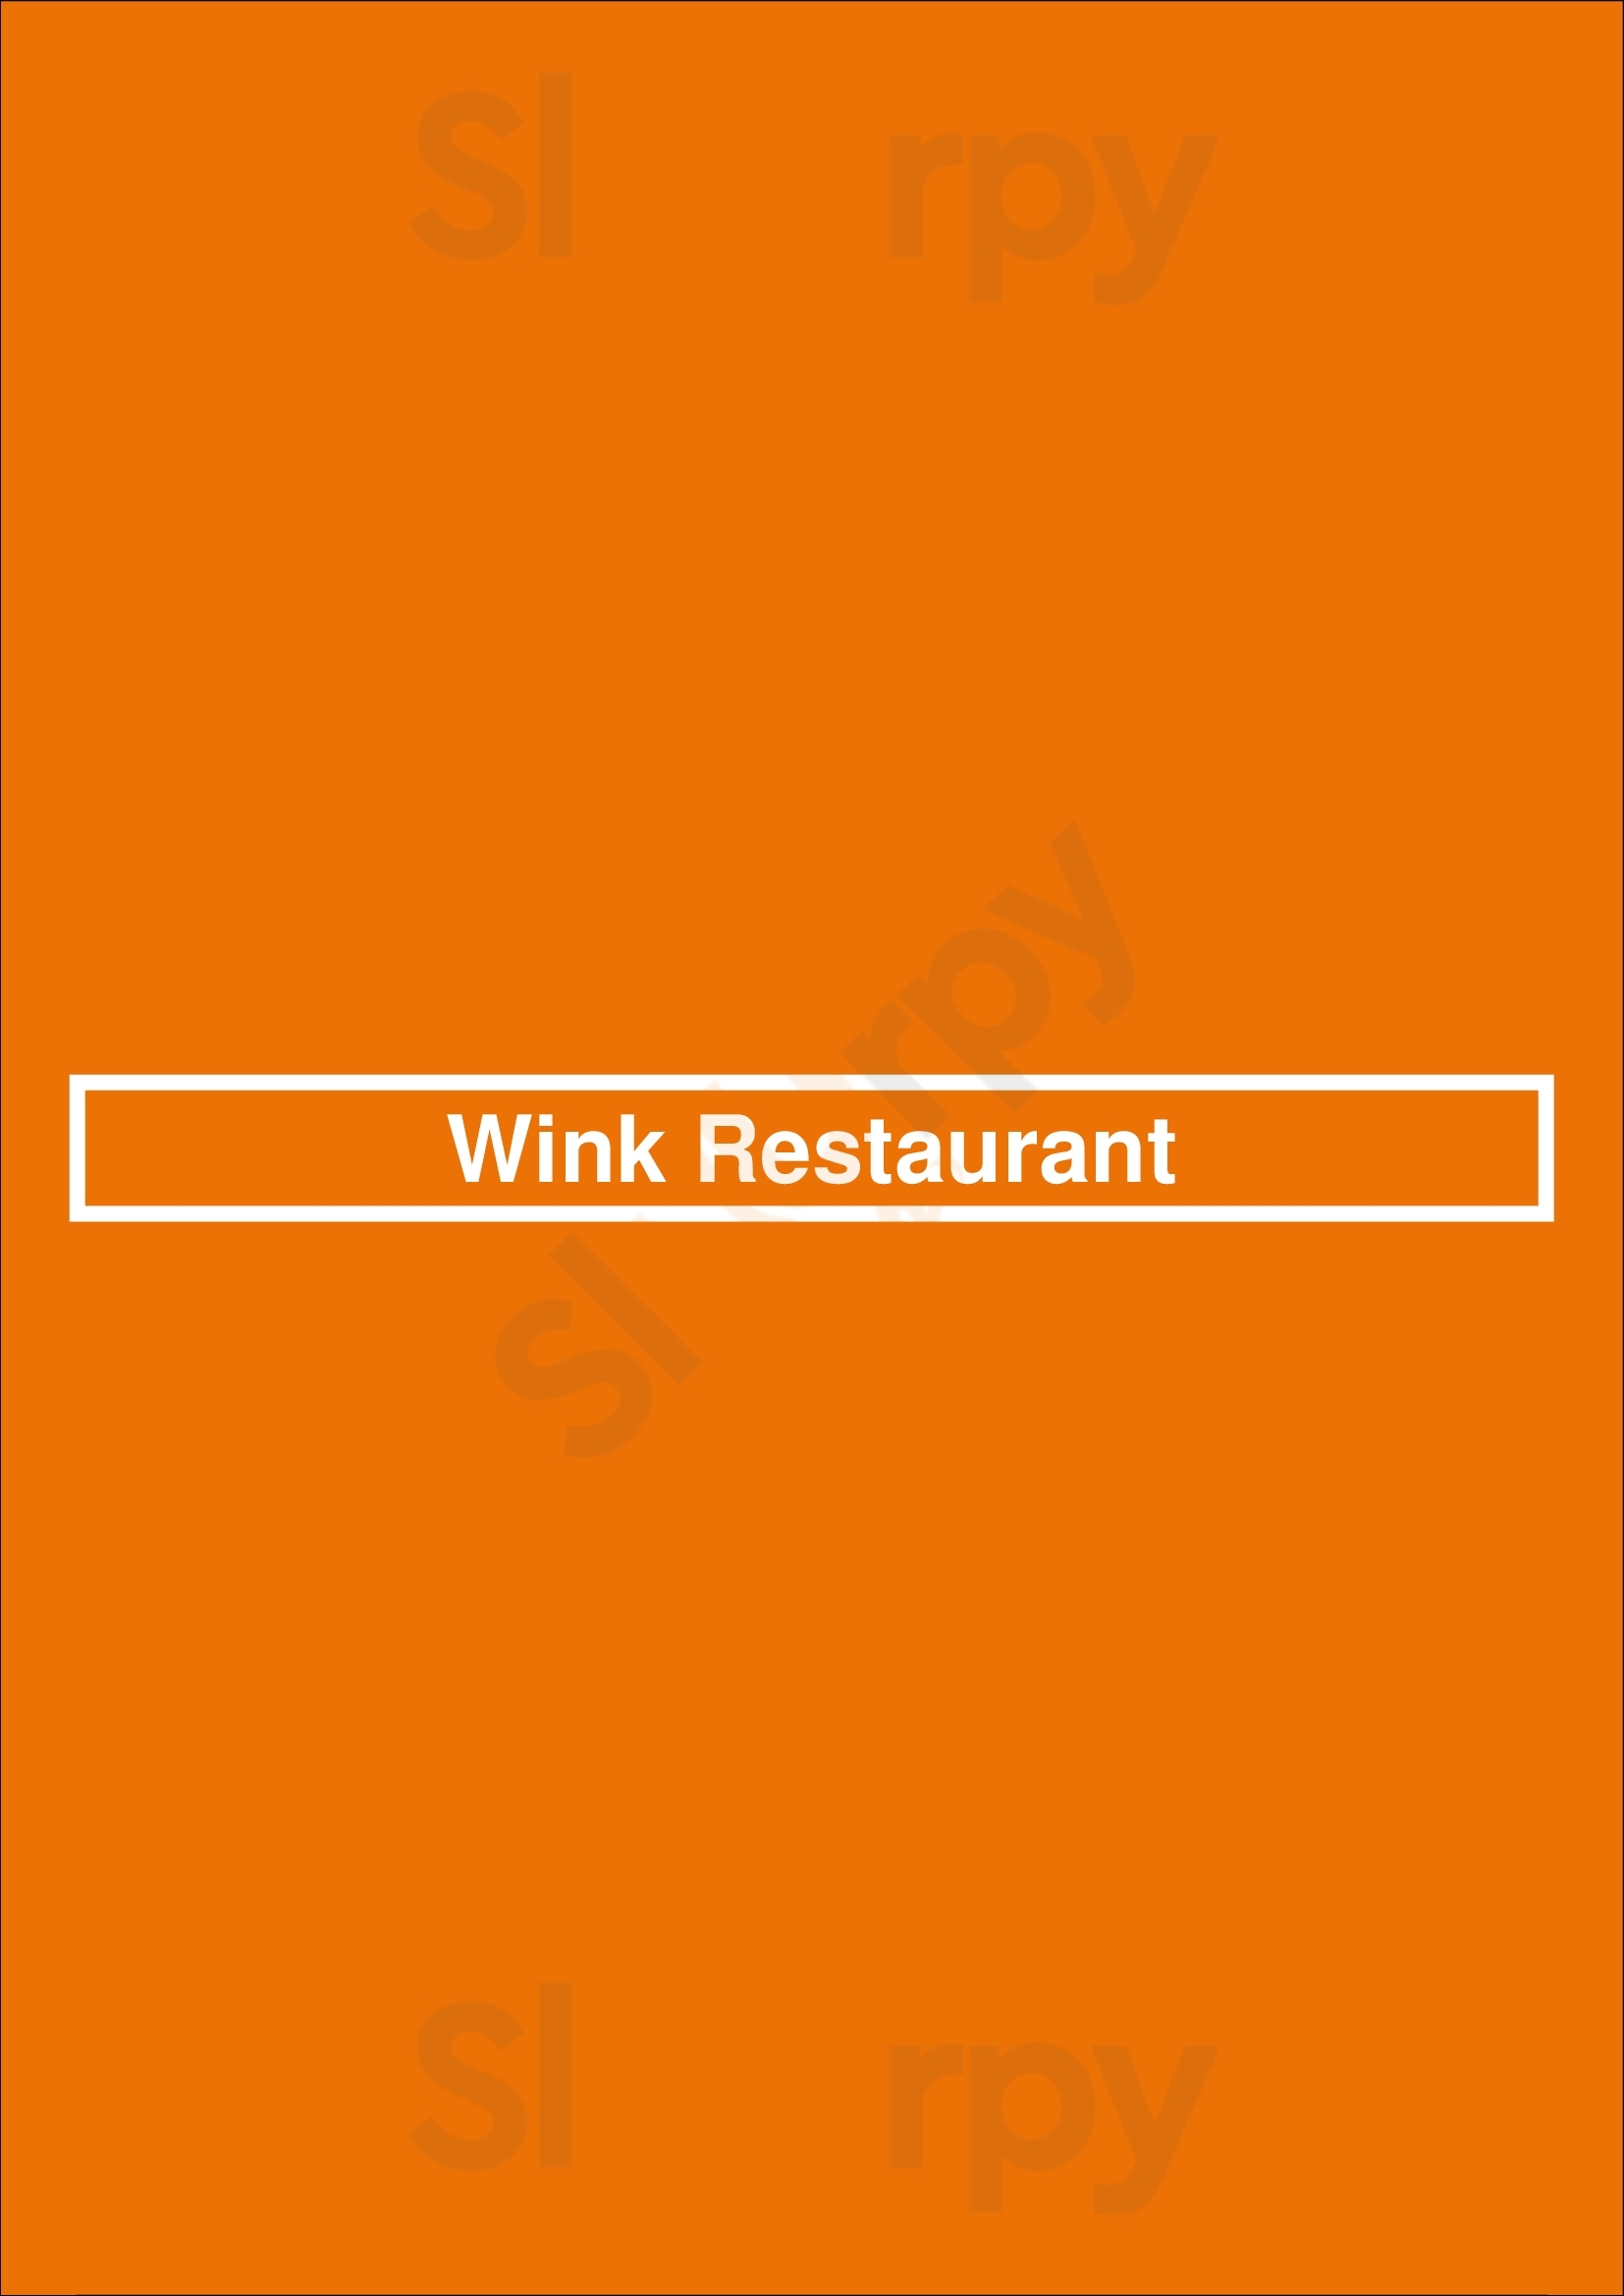 Wink Restaurant Austin Menu - 1